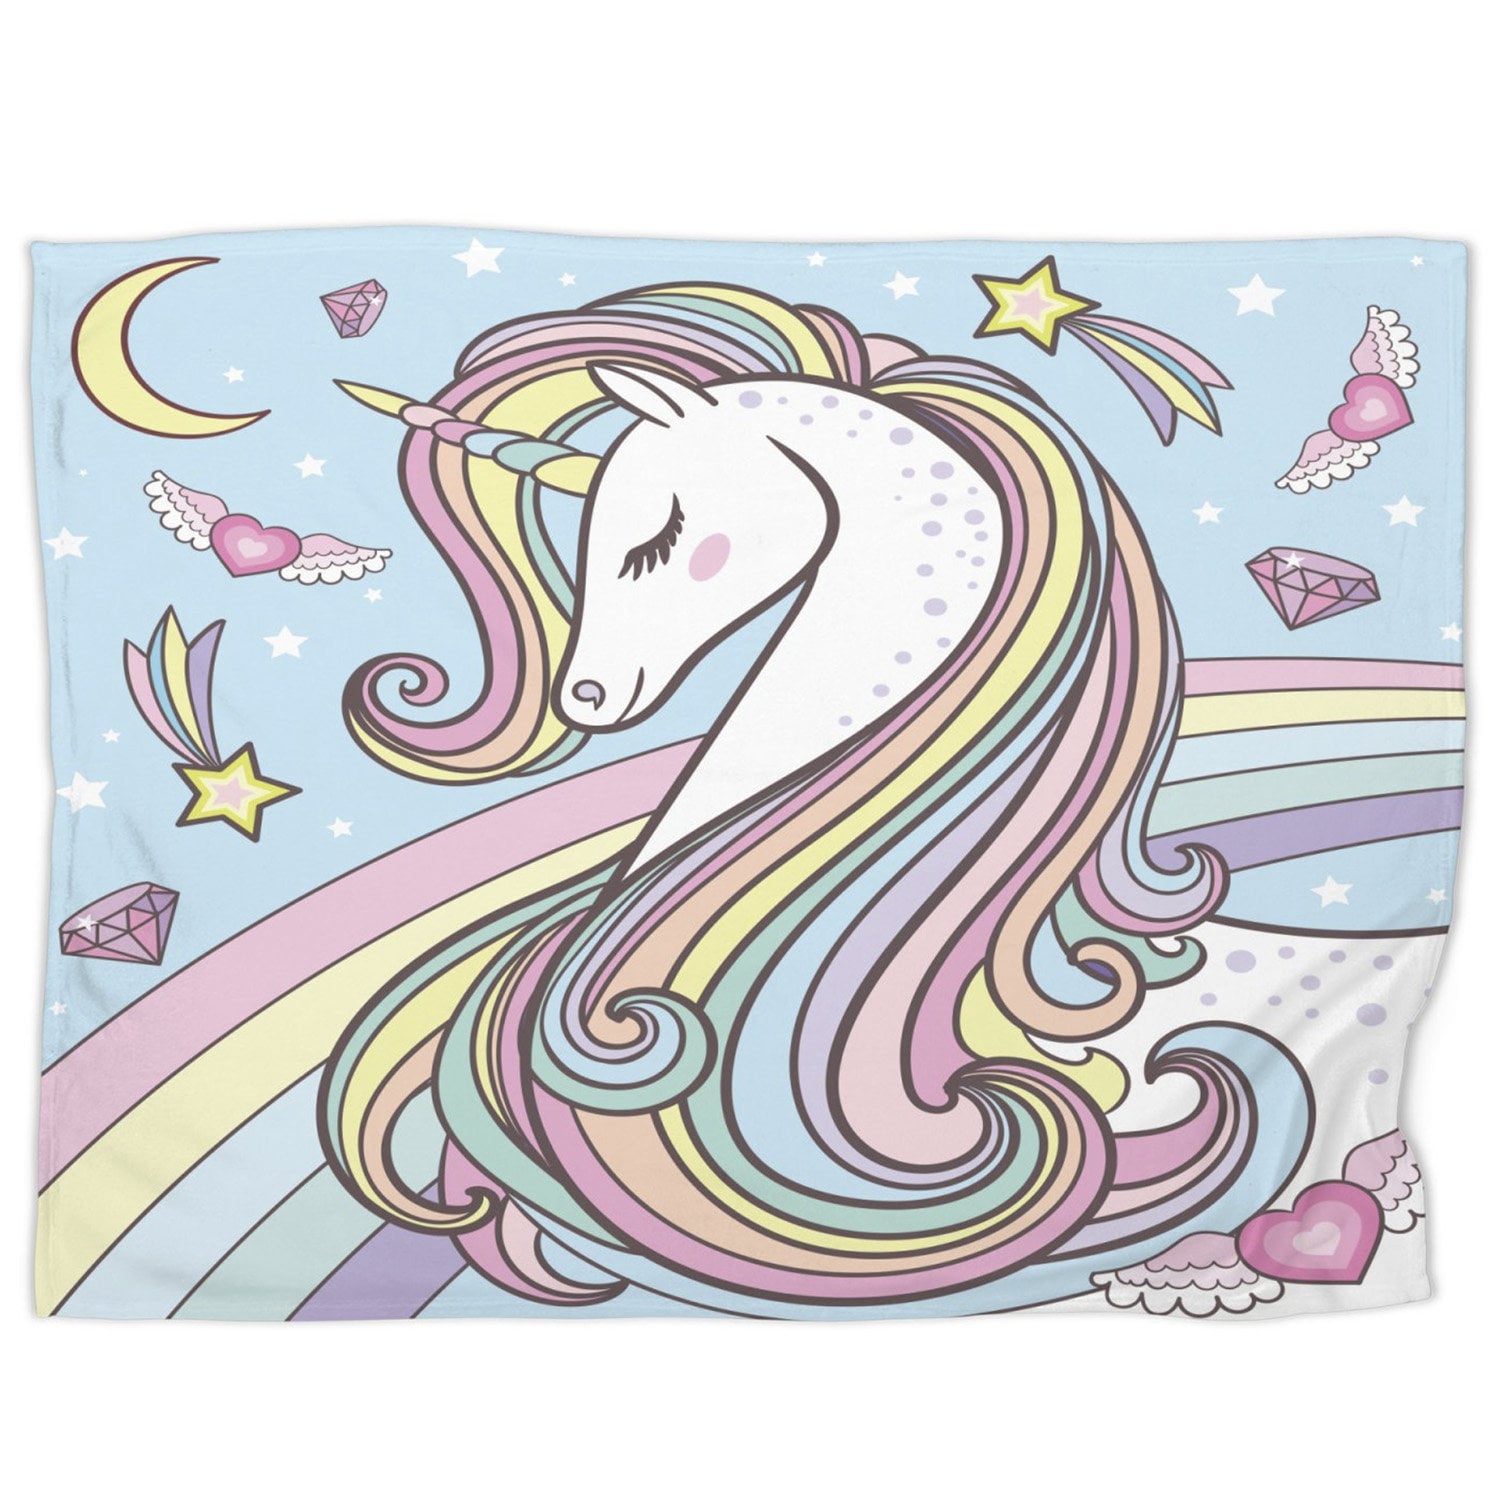 Unicorn Blanket girly blanket kids blanket blue girls throw blanket Colorful Kids Baby blanket rainbow Throw Blanket soft unicorn blankets